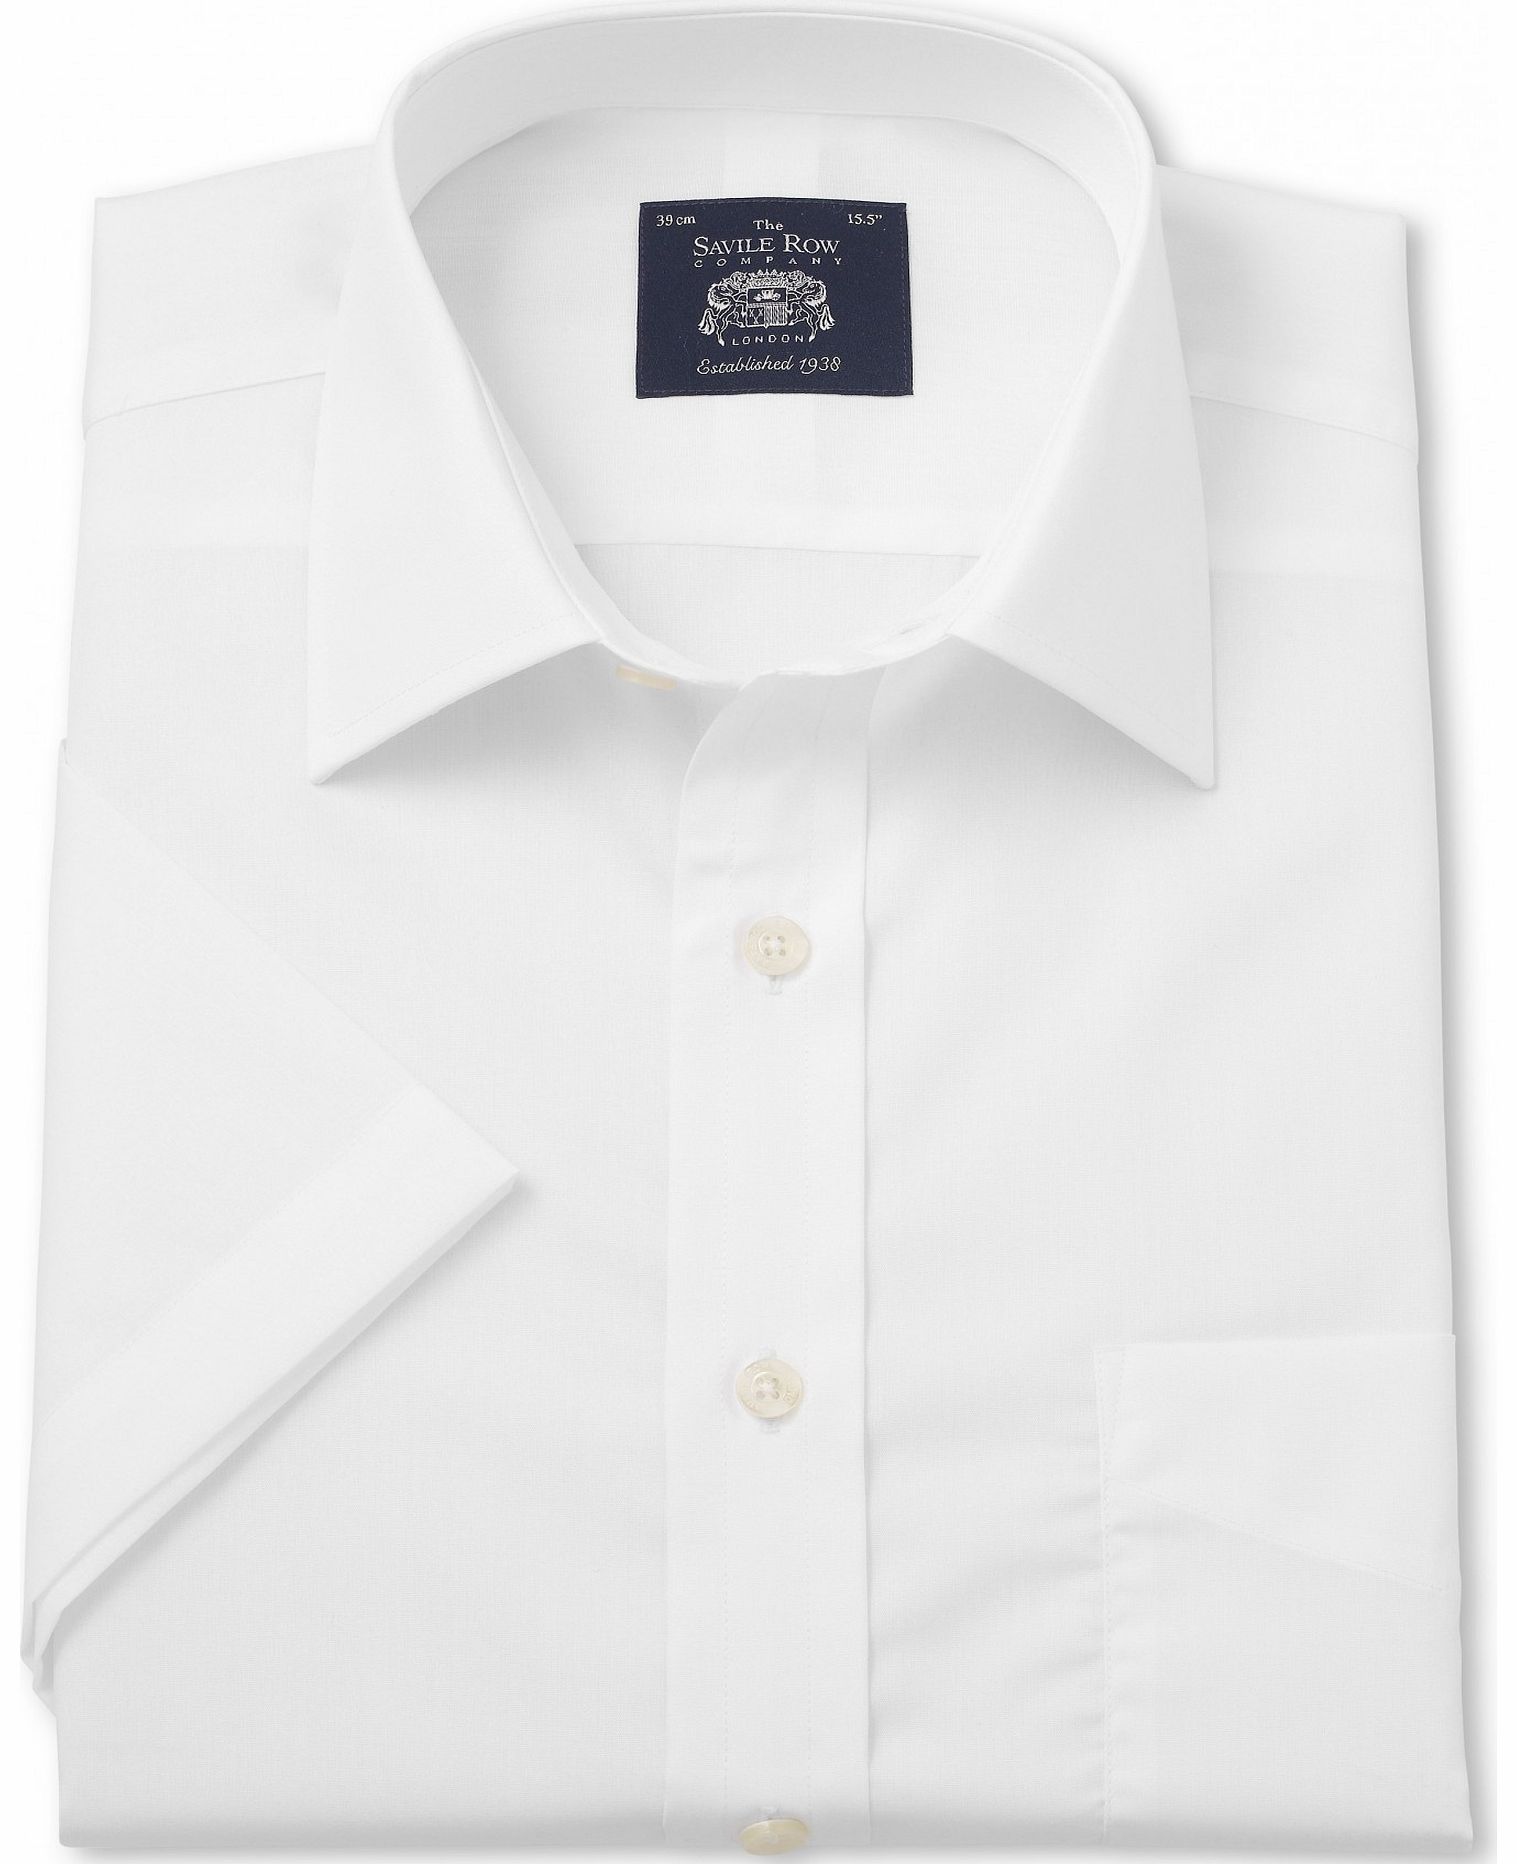 Savile Row Company White Poplin Classic Fit Short Sleeve Shirt 16